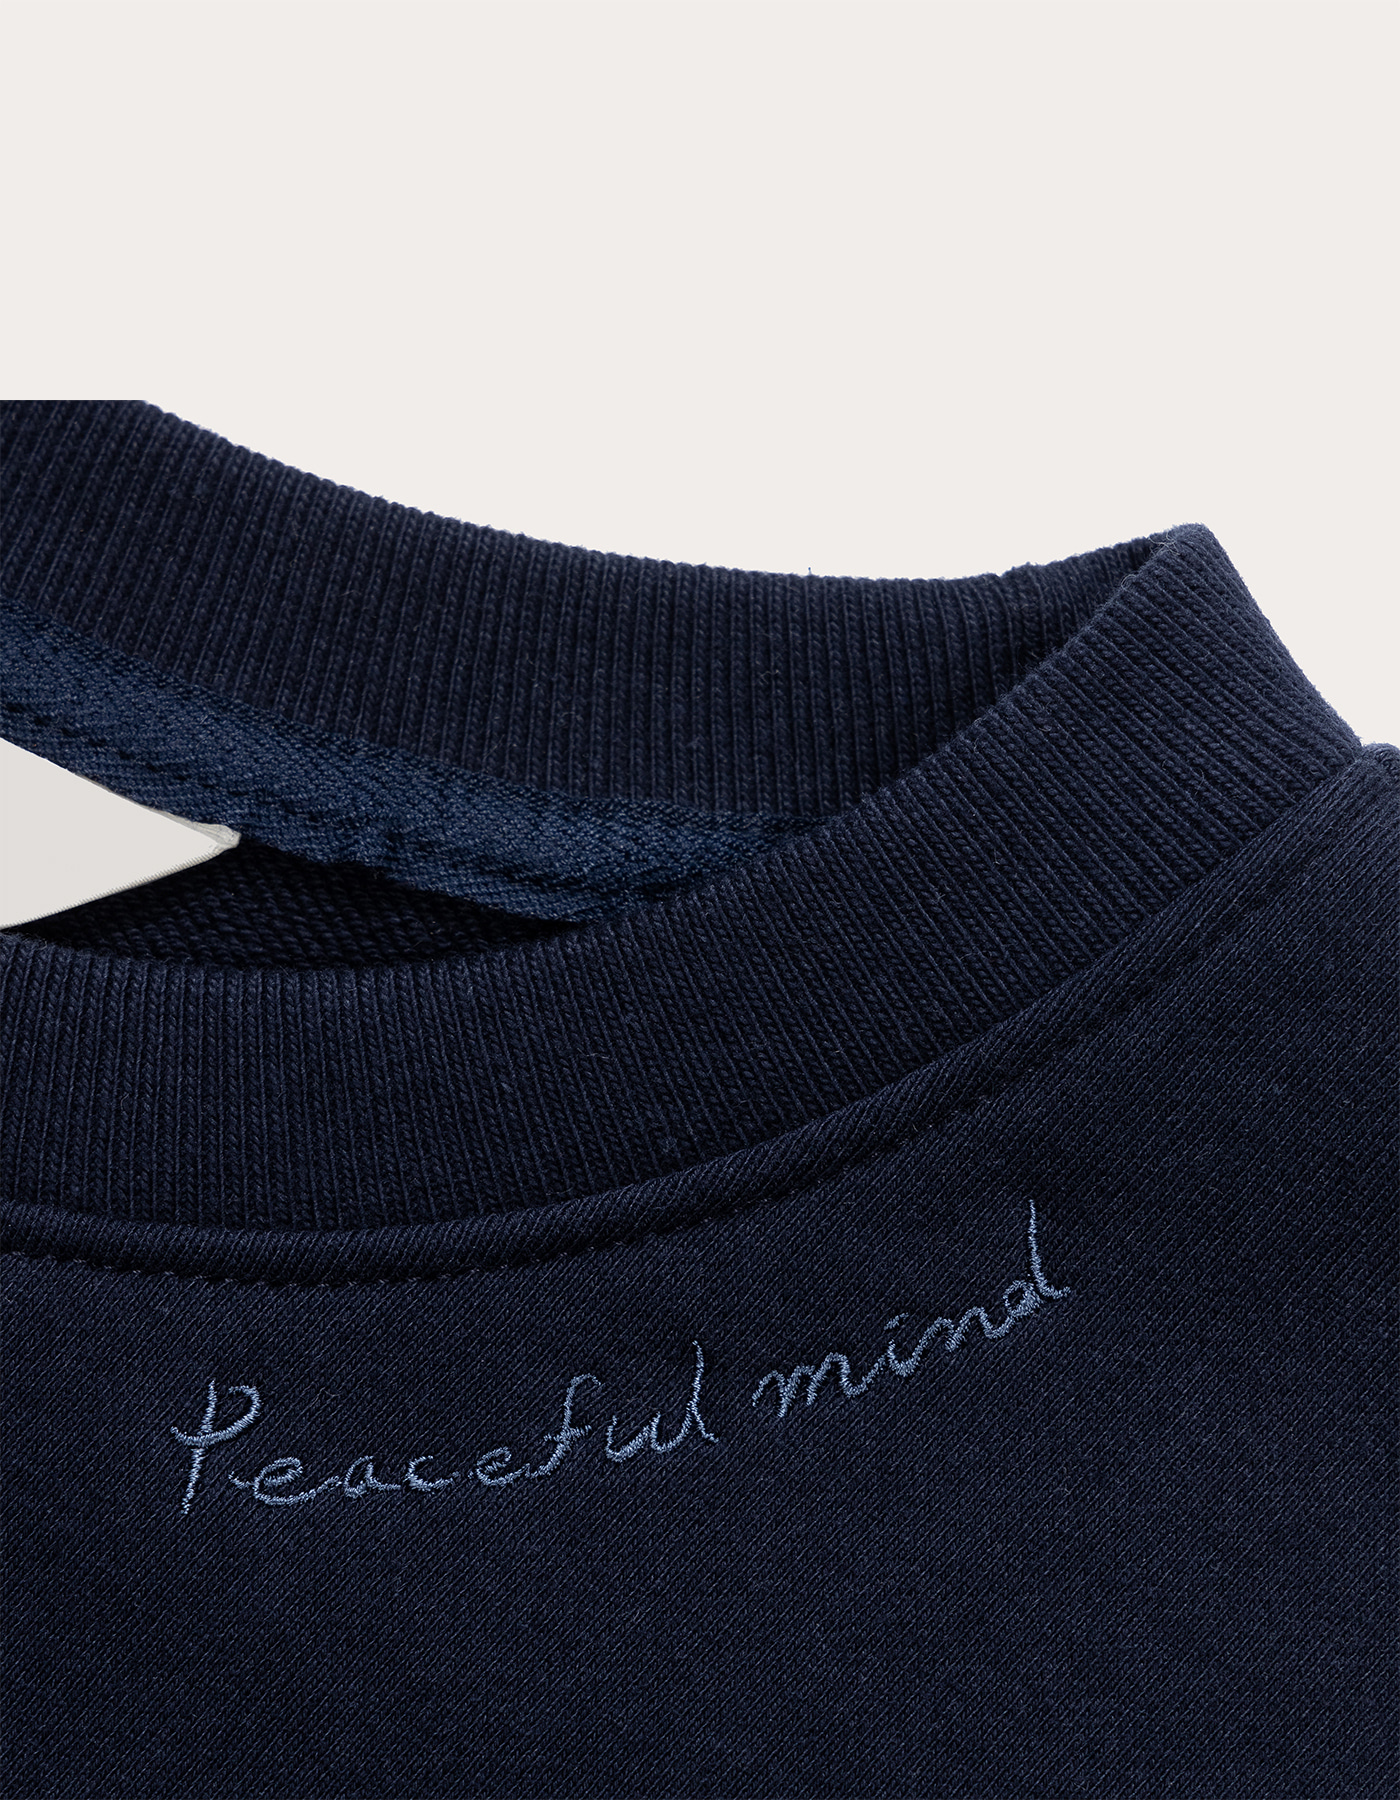 Soft Peaceful Embroidery Sweatshirt (Navy)